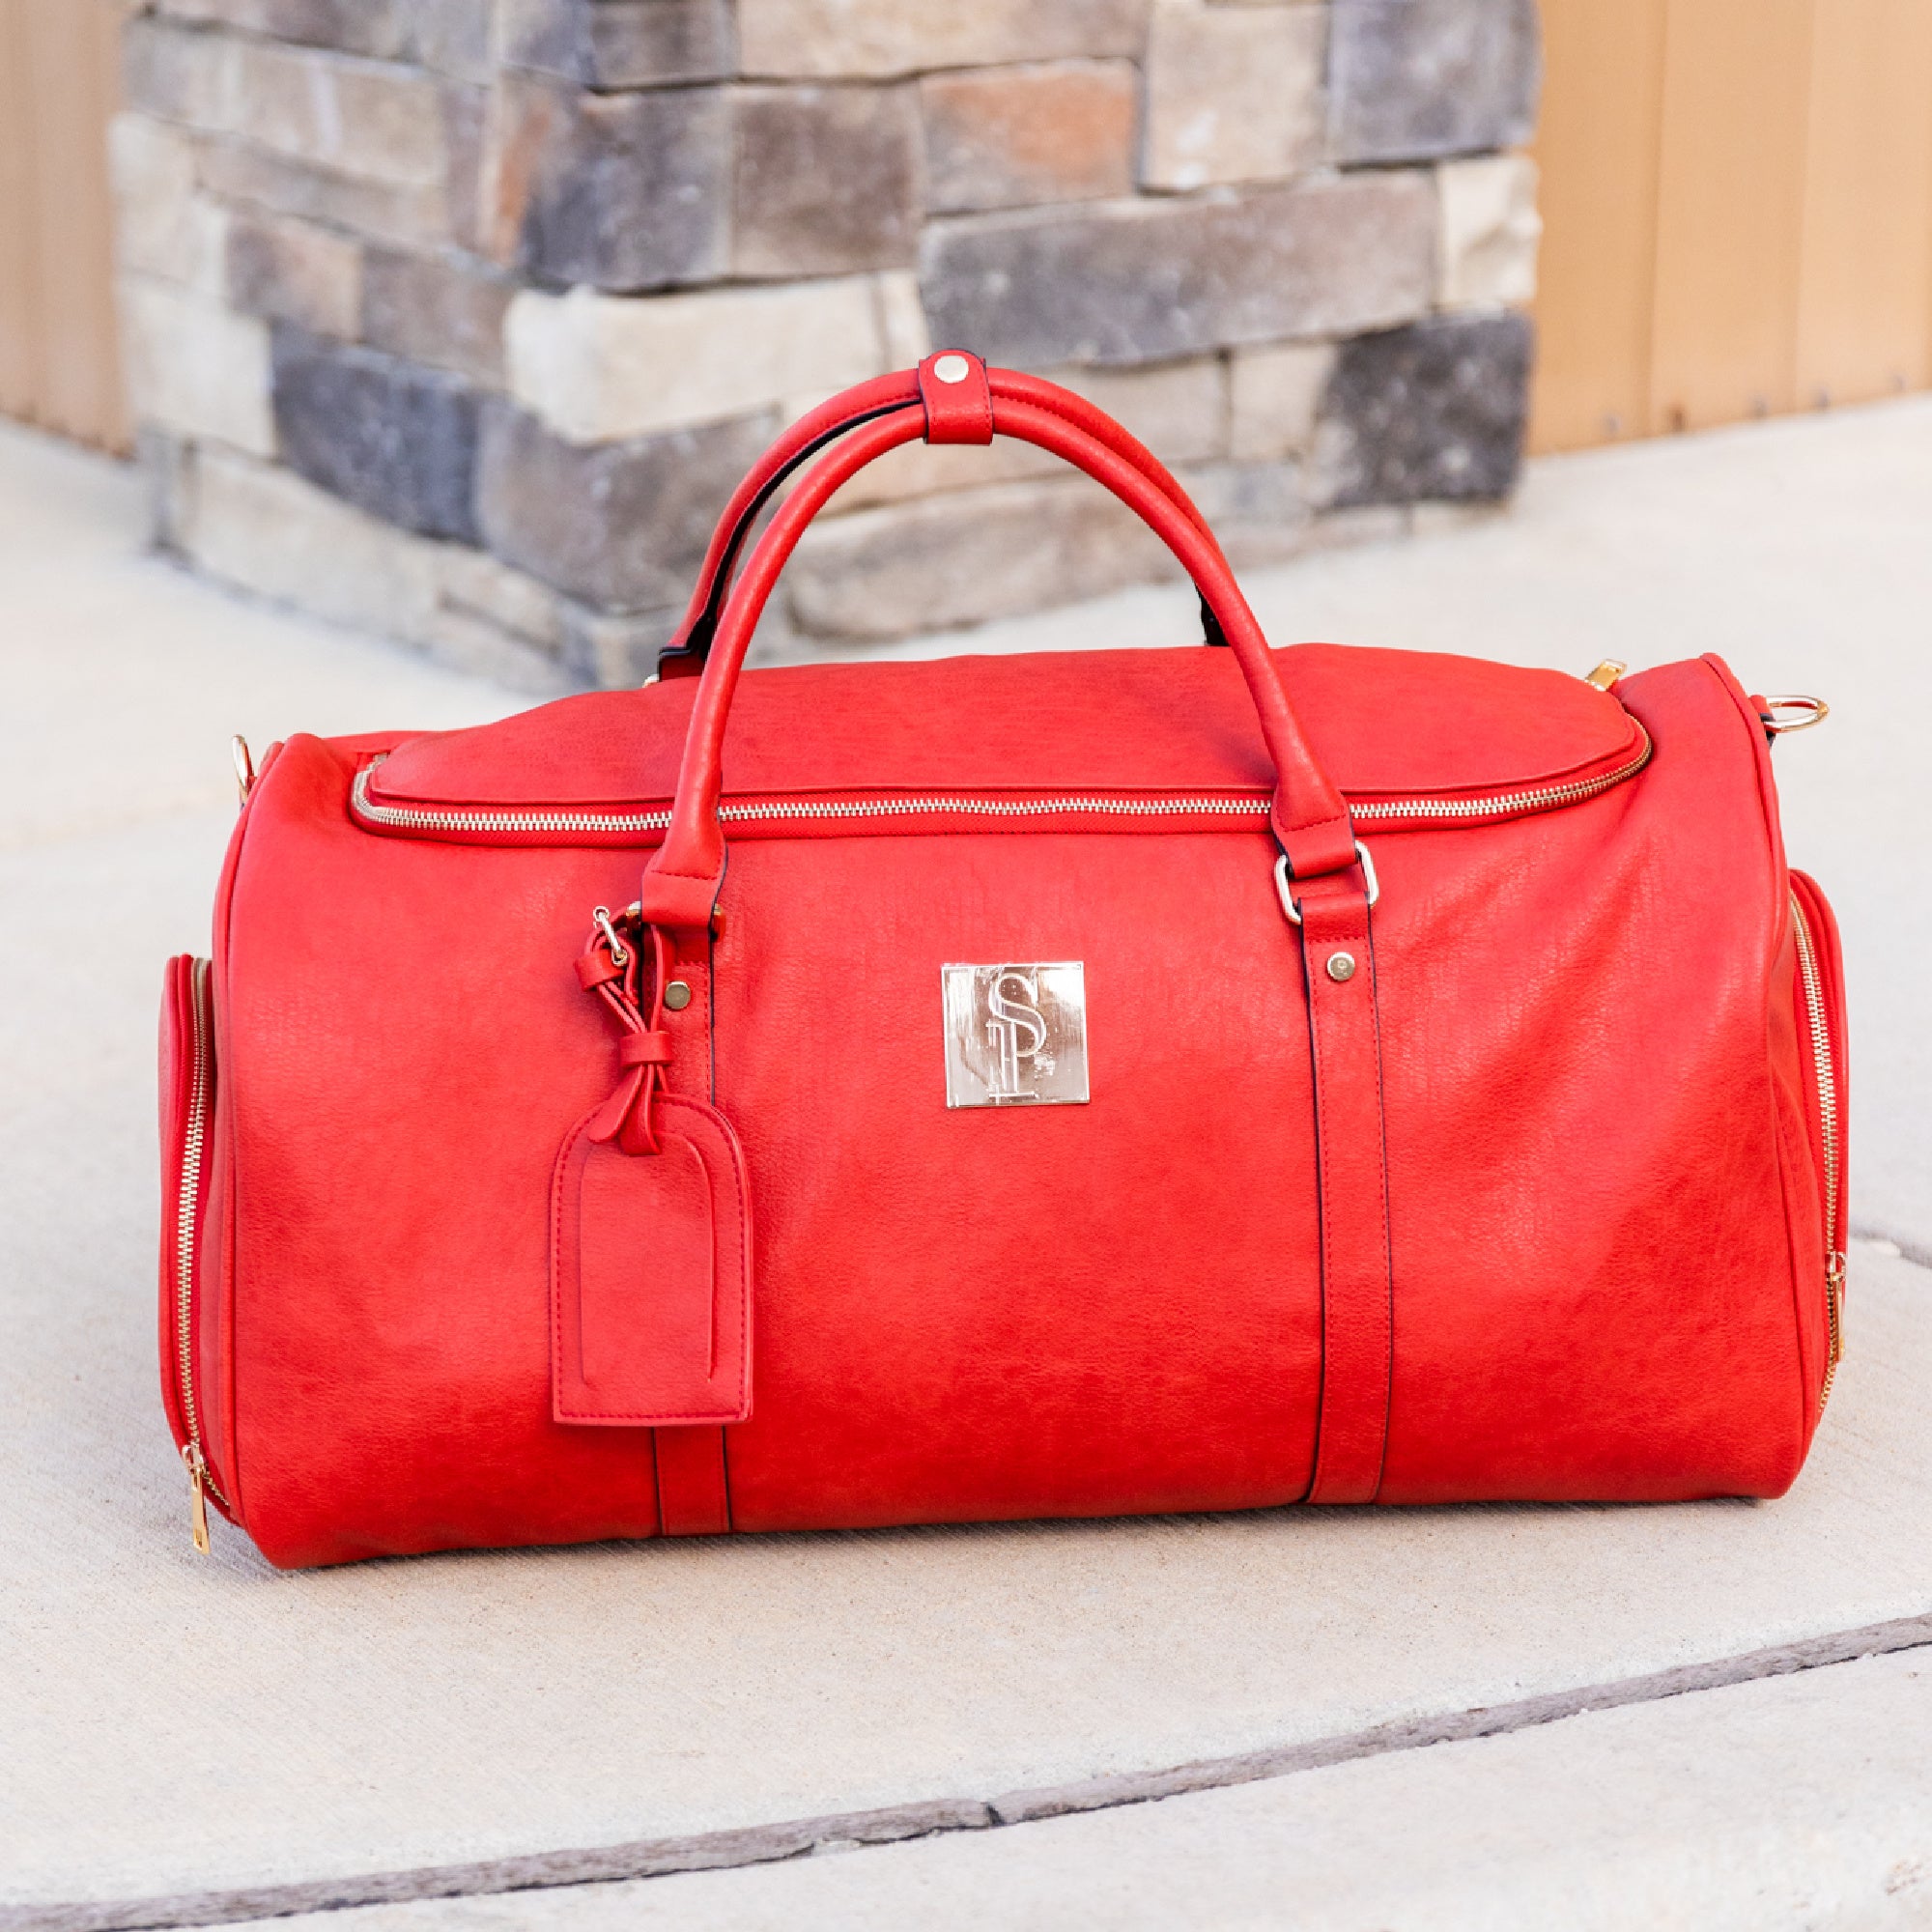 Chanel Red Lambskin Leather Tassel Flap Bag